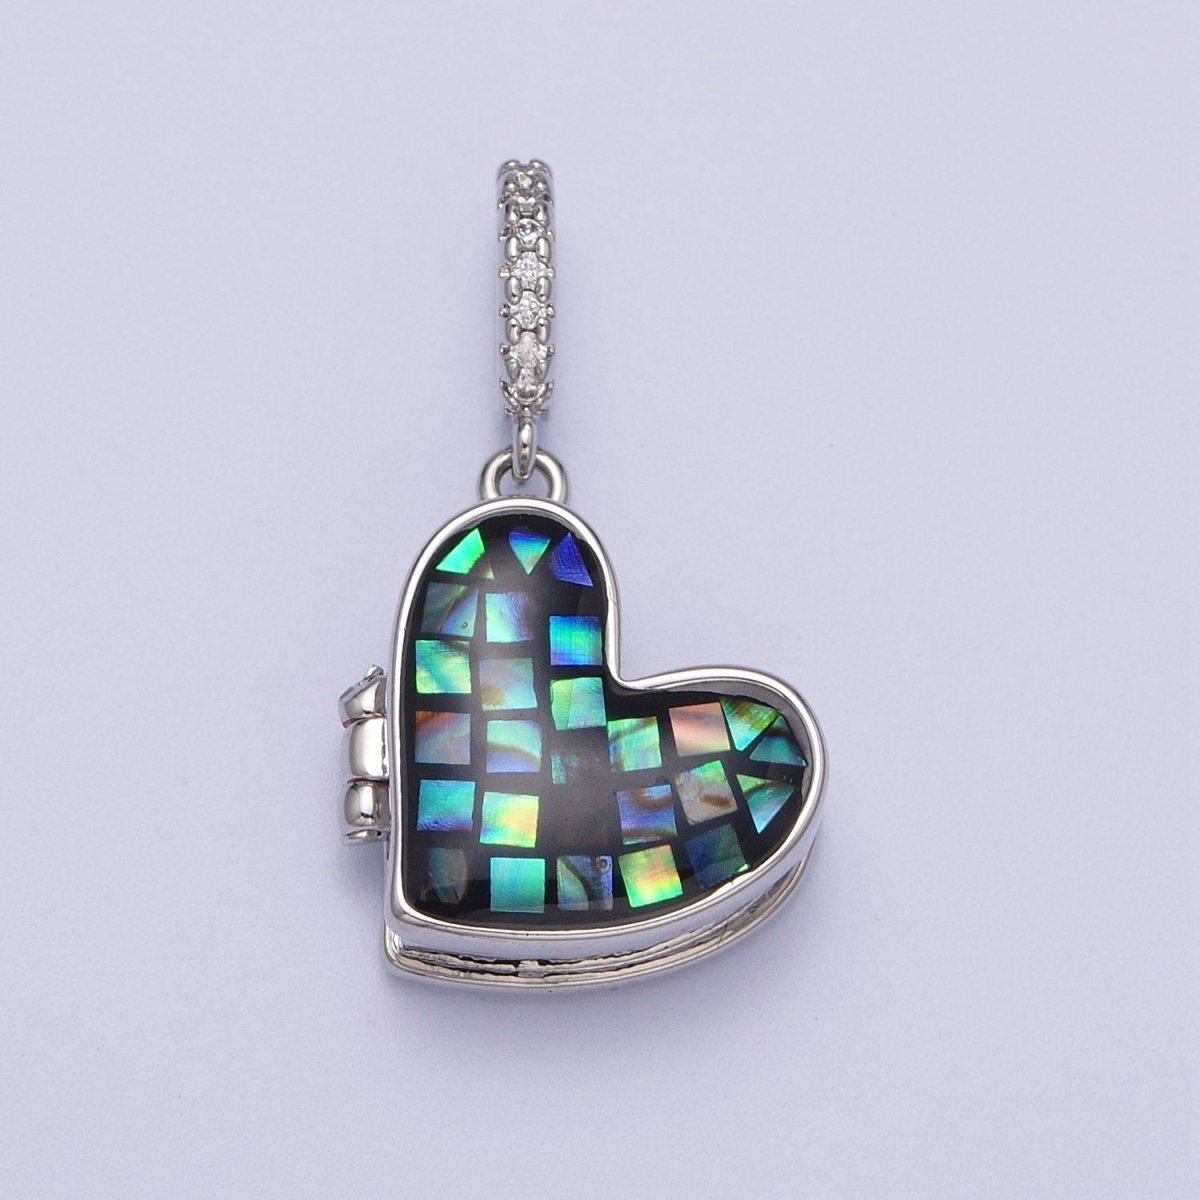 White Gold Filled Heart Black, Blue, Pink, White, Green Shell Opal Heart Locket Pendant H-086 H-090 H-091 H-097 H-103 - DLUXCA